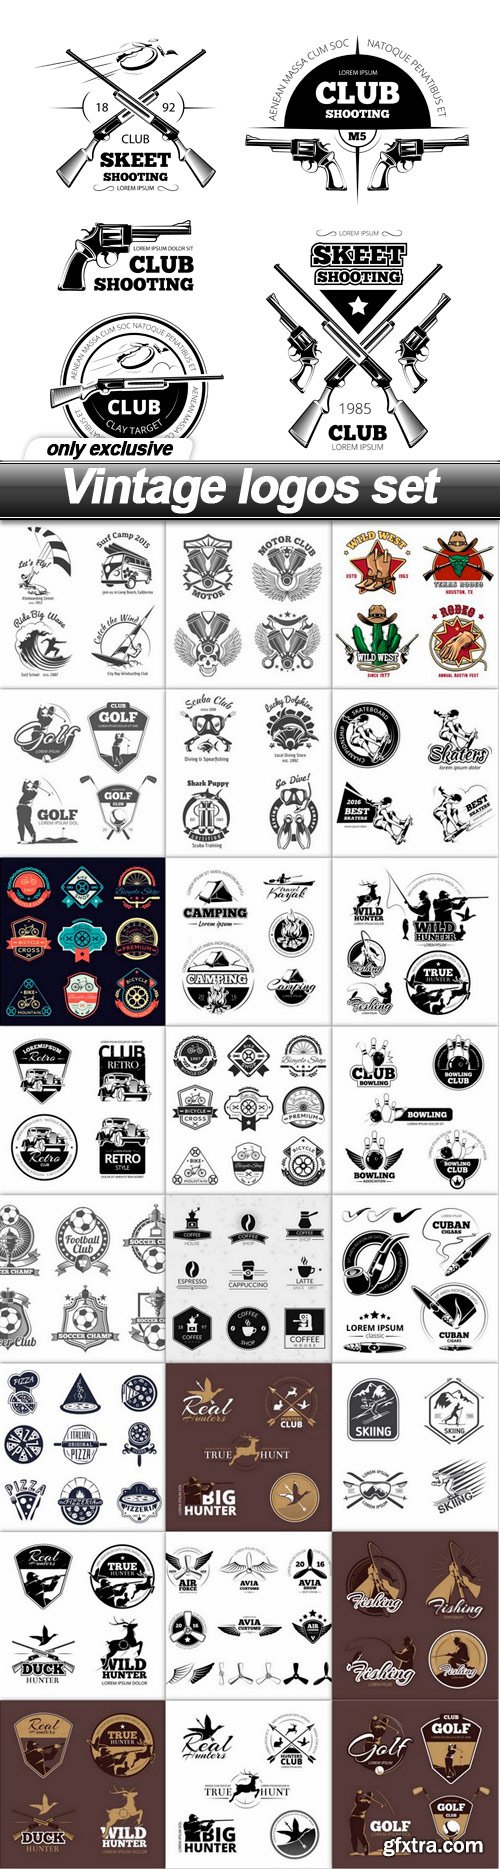 Vintage logos set - 25 EPS